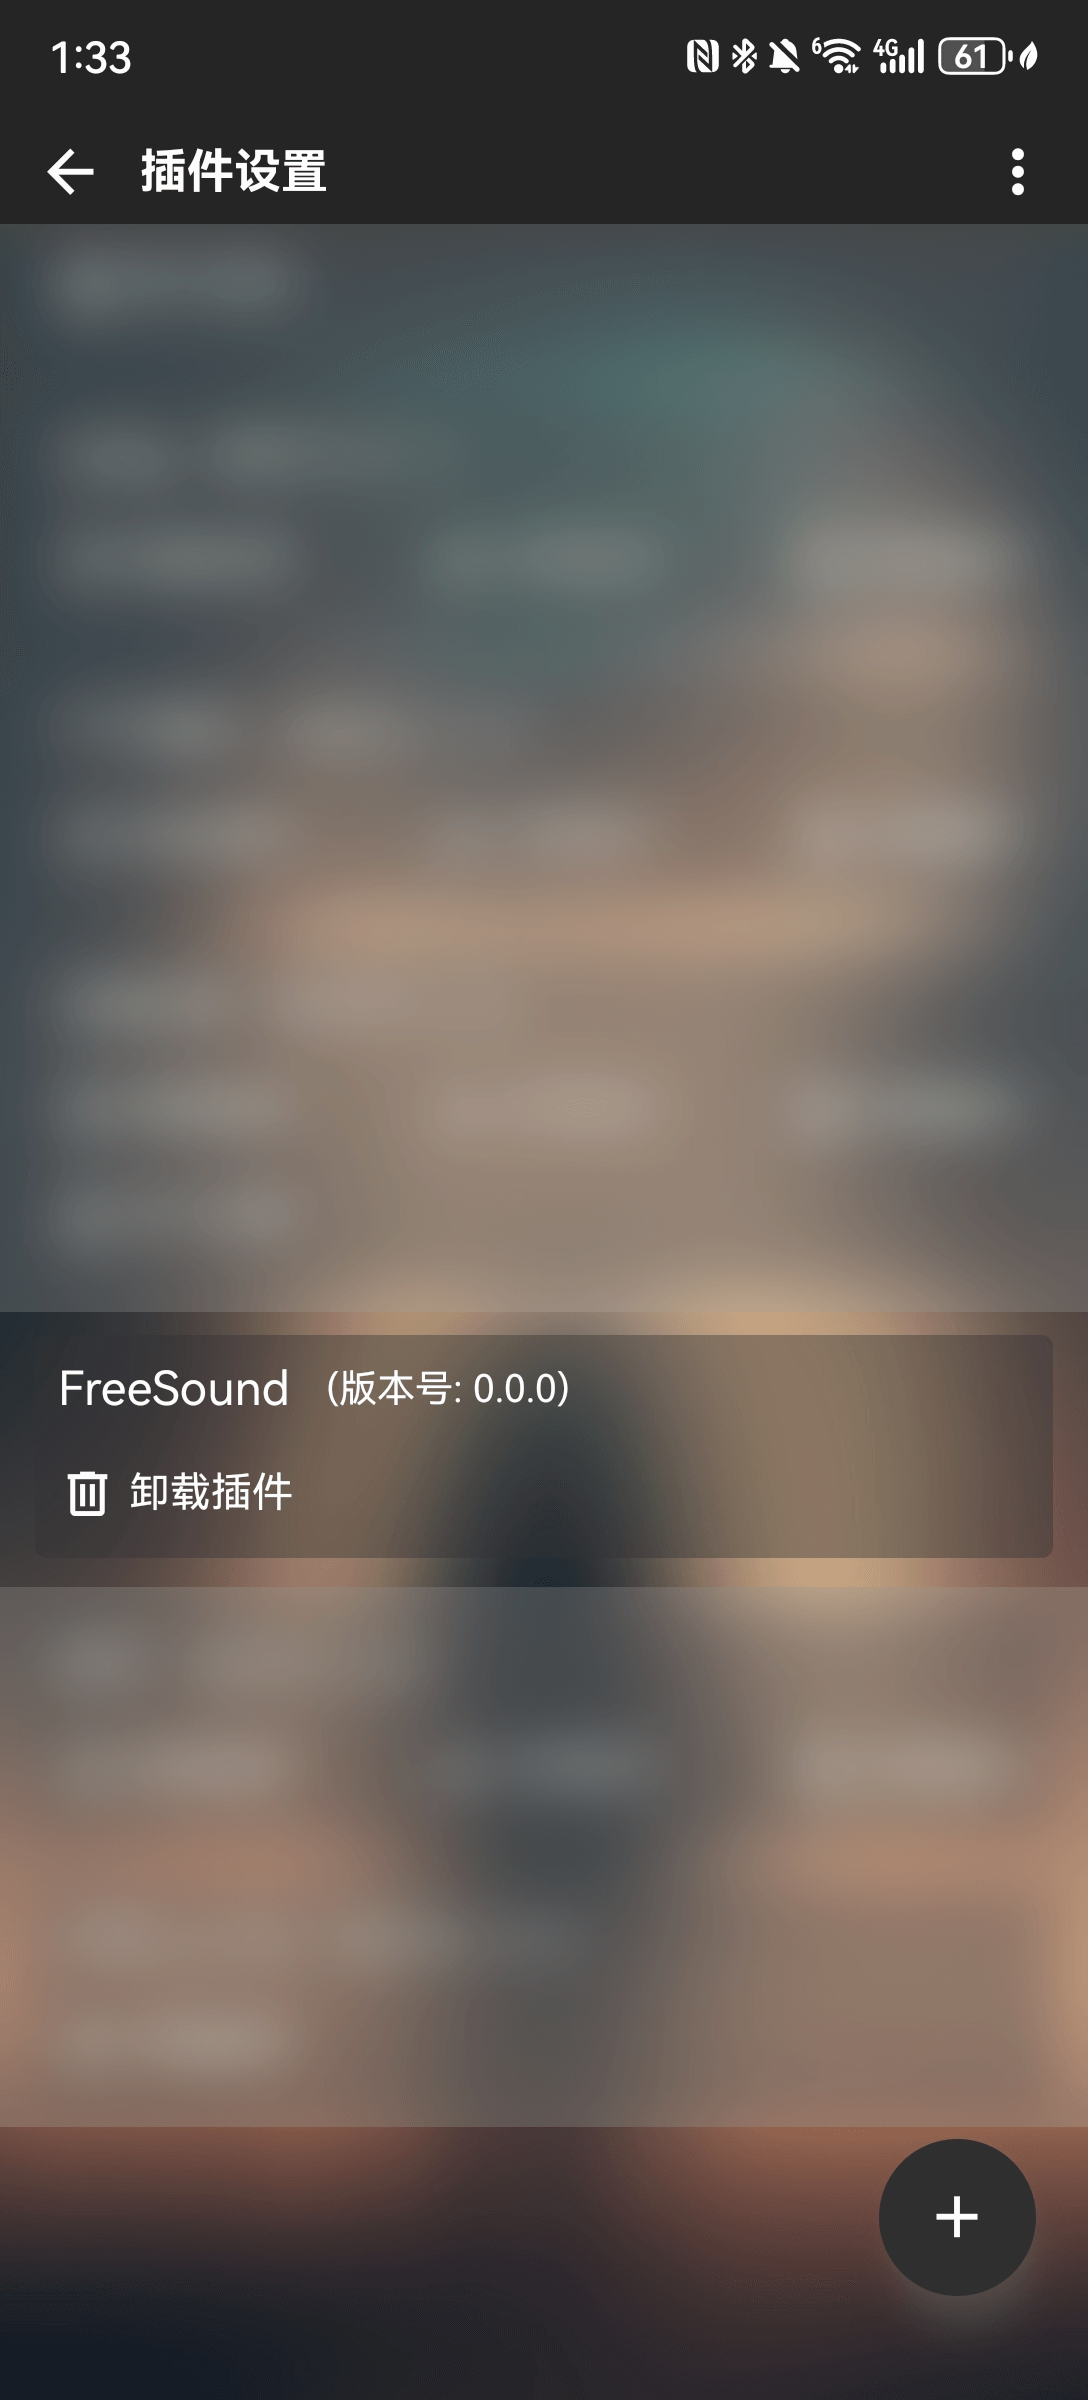 freesound3